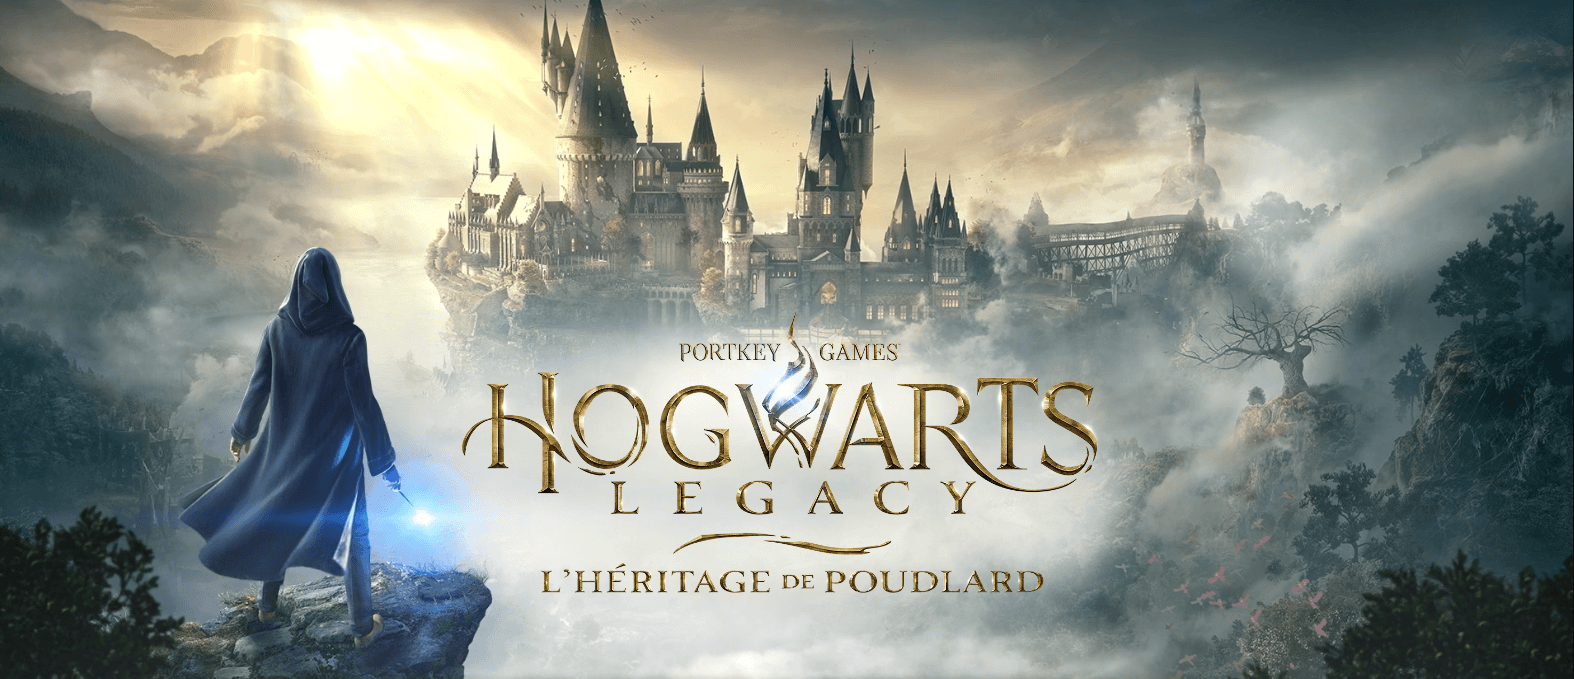 hogwarts legacy : date de sortie xbox one